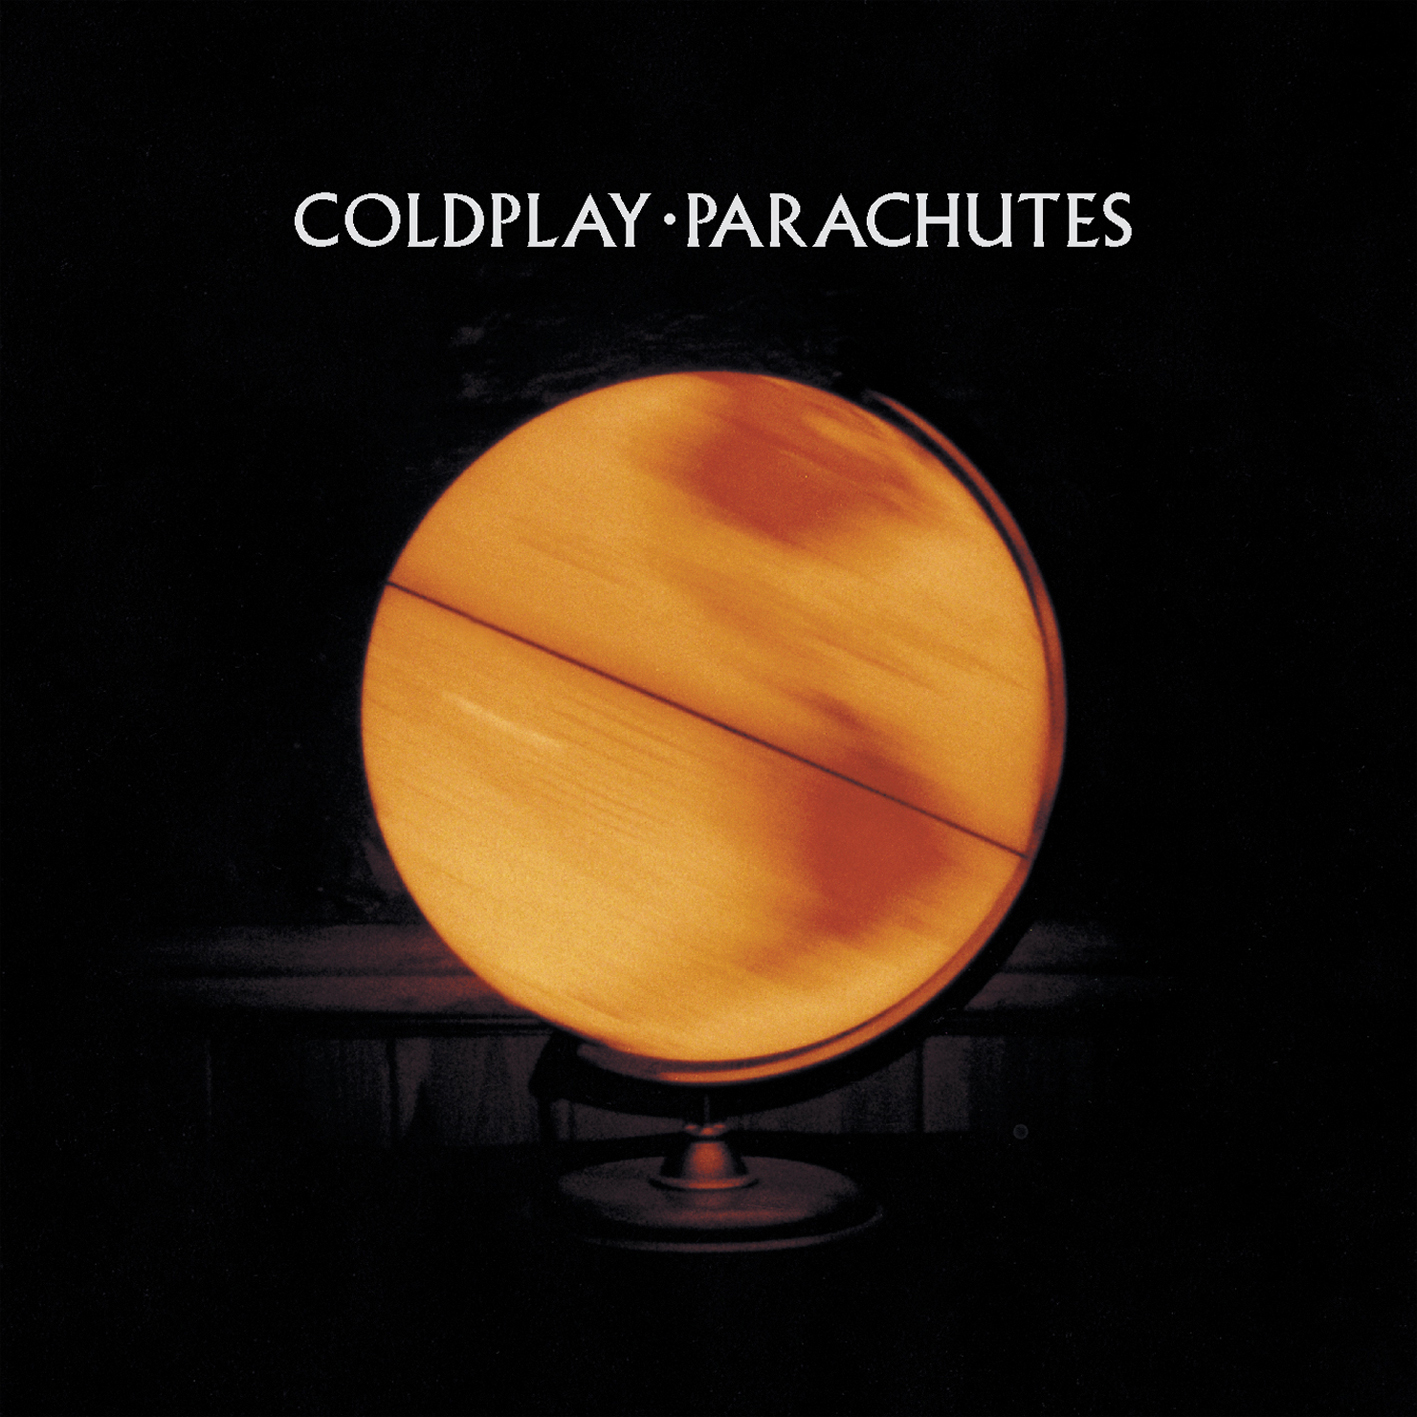 Coldplay - Parachutes (2000/2016) [HDTracks FLAC 24bit/192kHz]